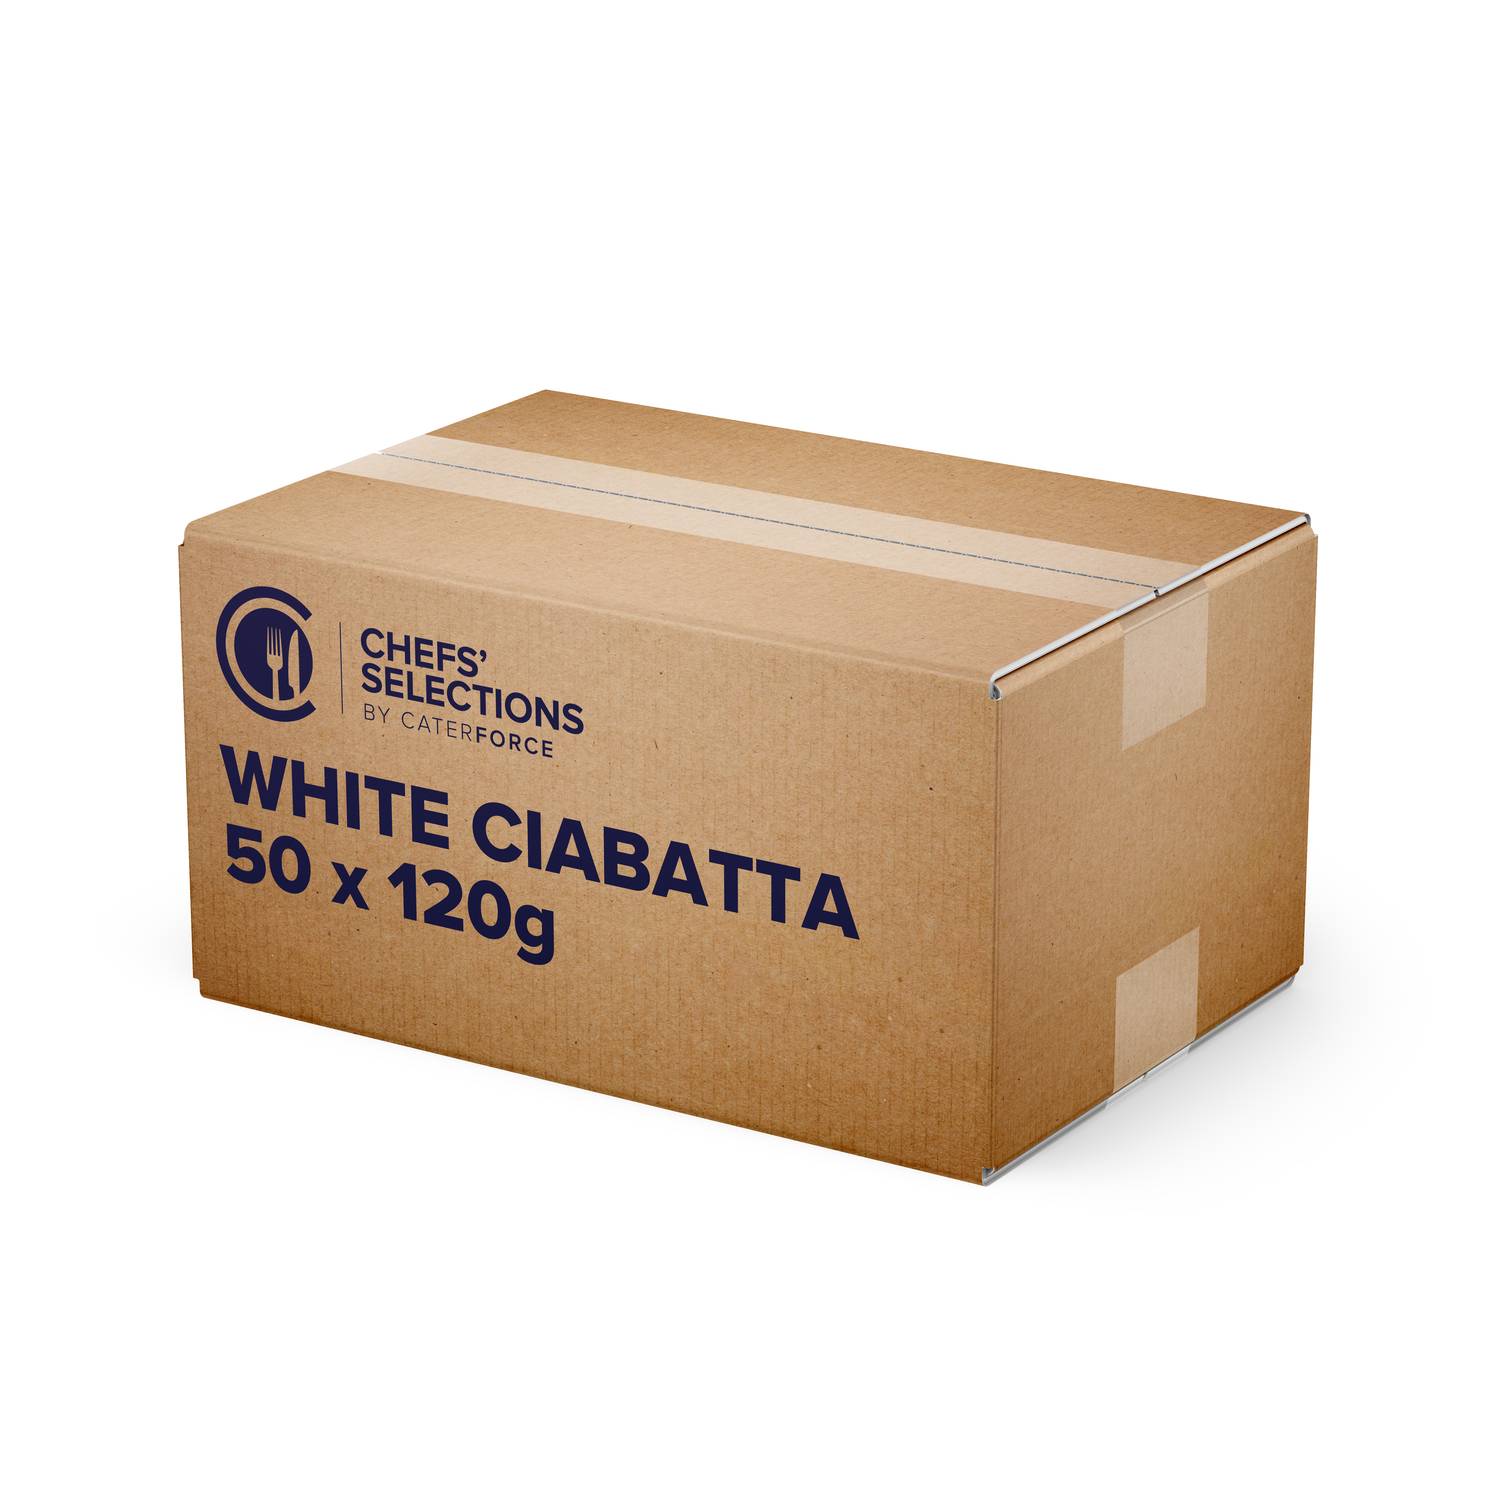 Chefs’ Selections White Ciabatta (50 x 120g)